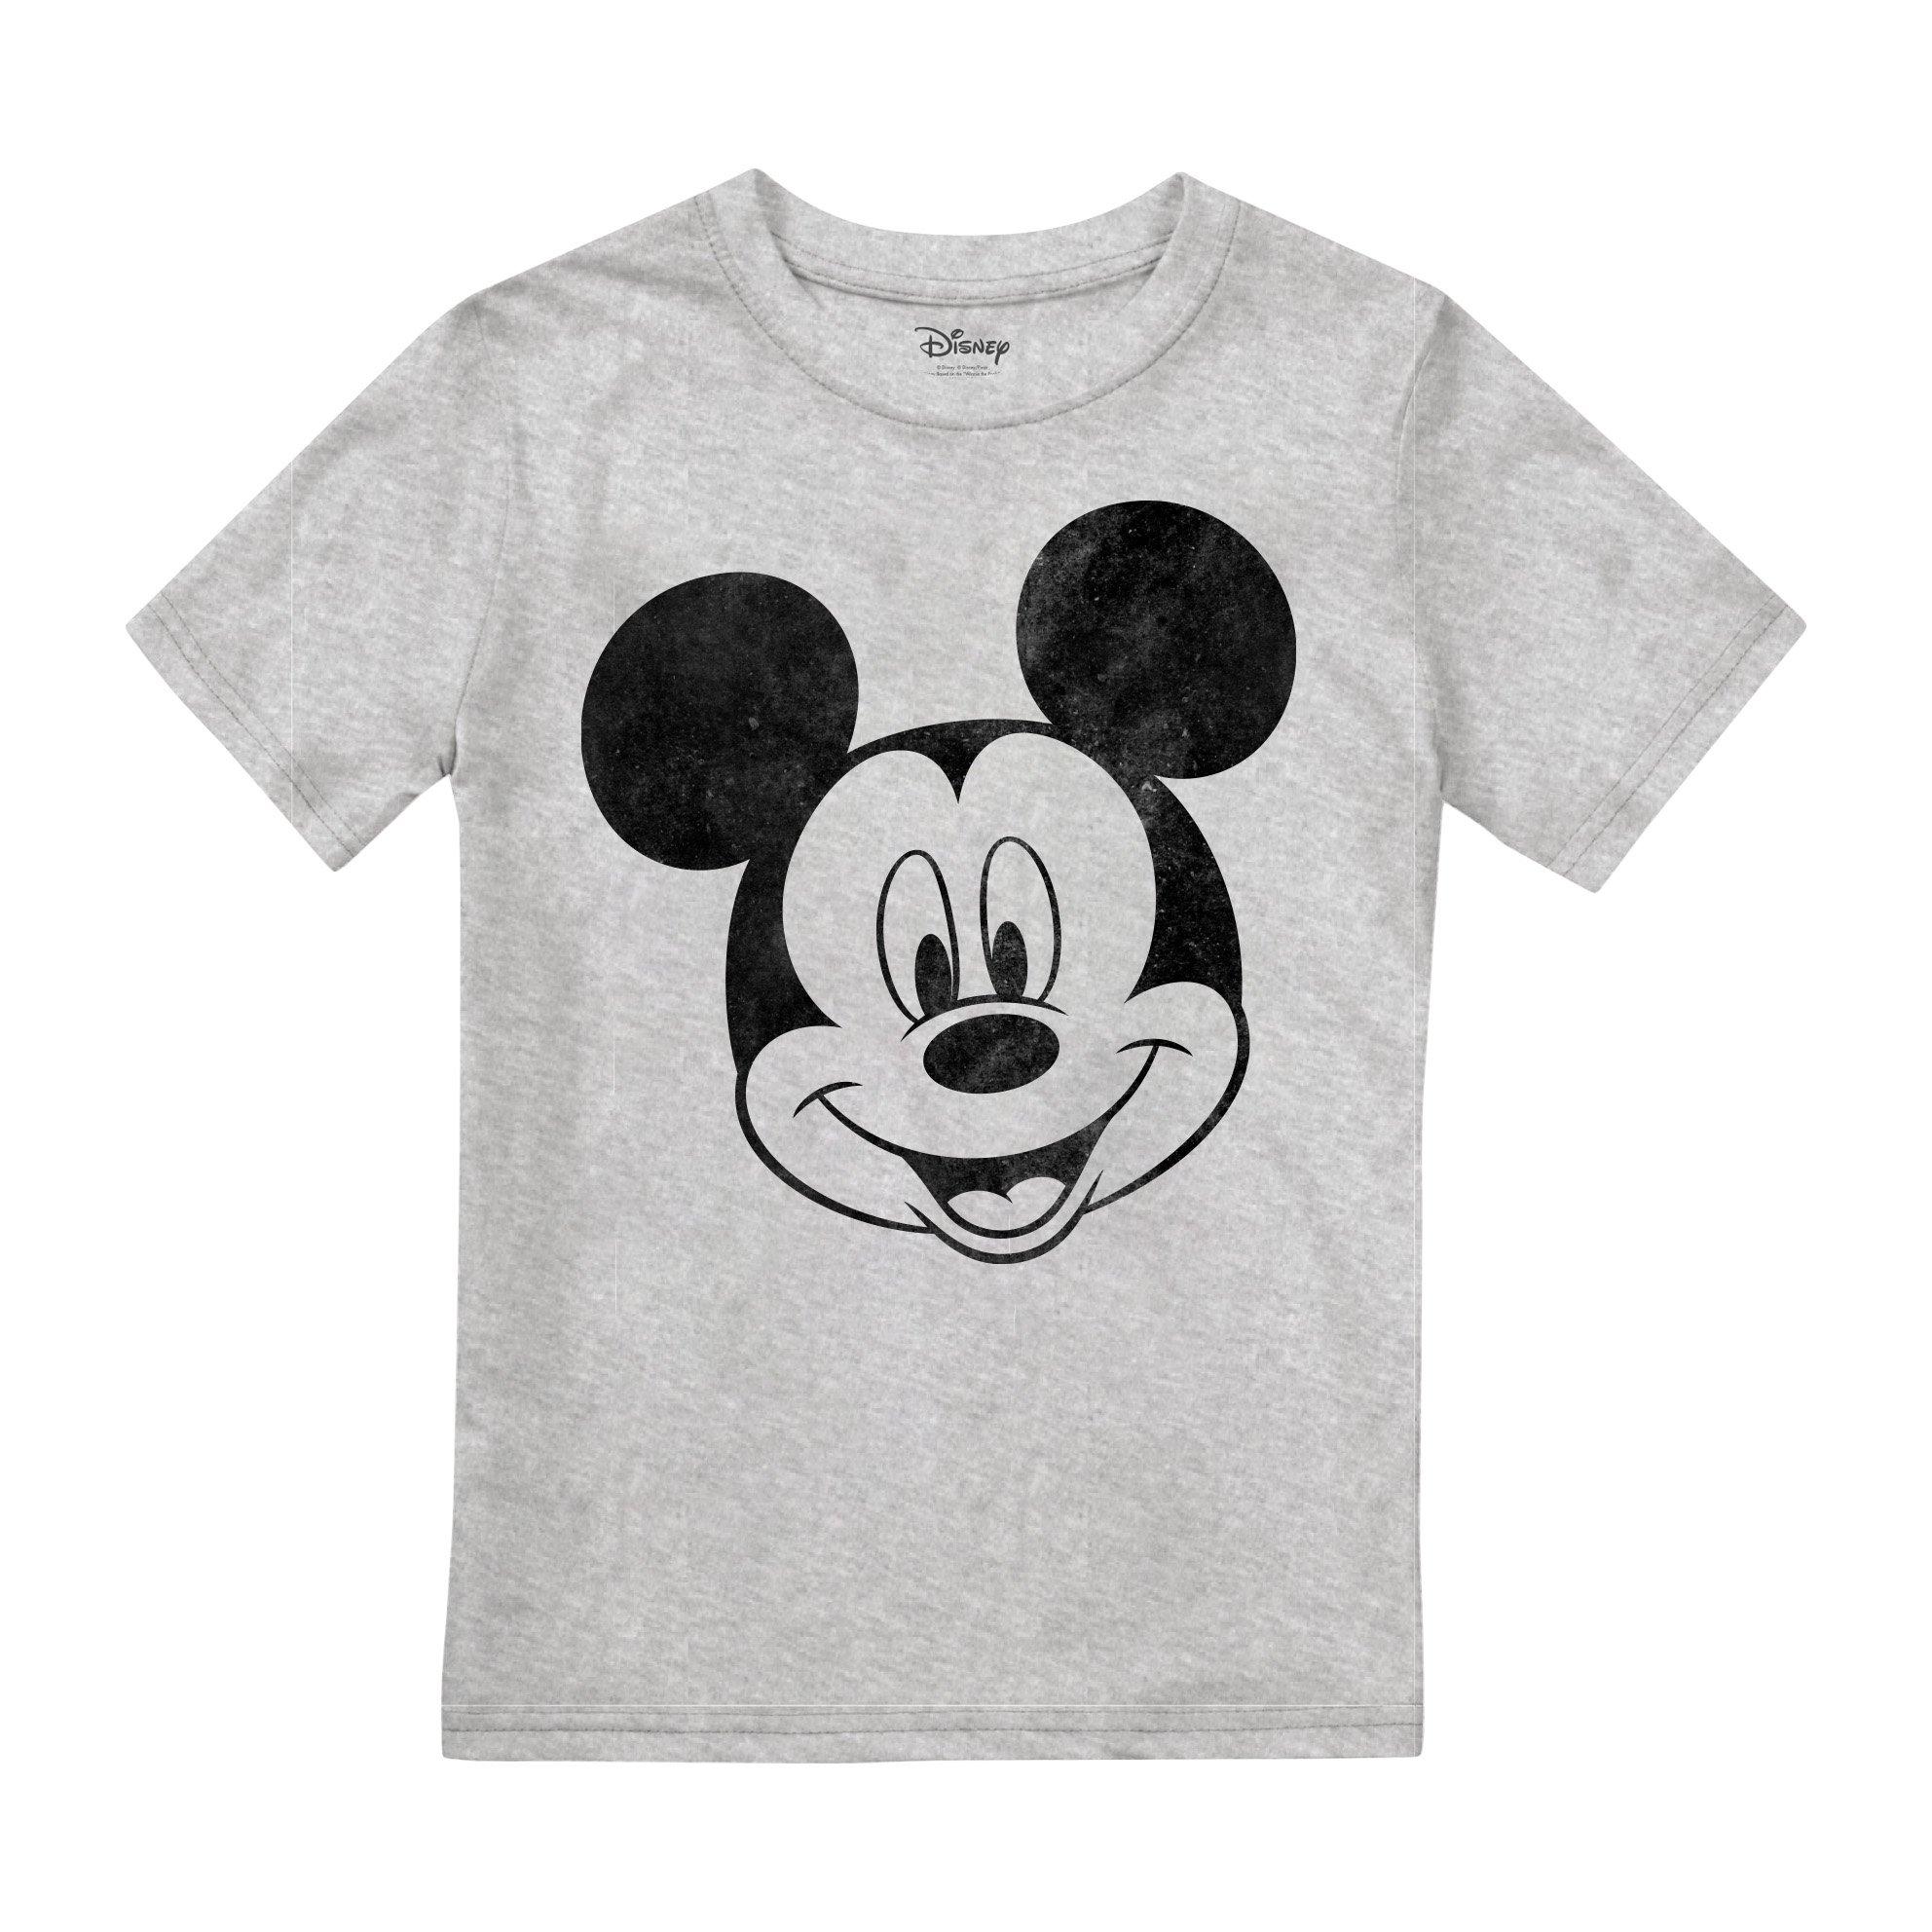 цена Однотонная футболка с Микки Маусом Disney, серый